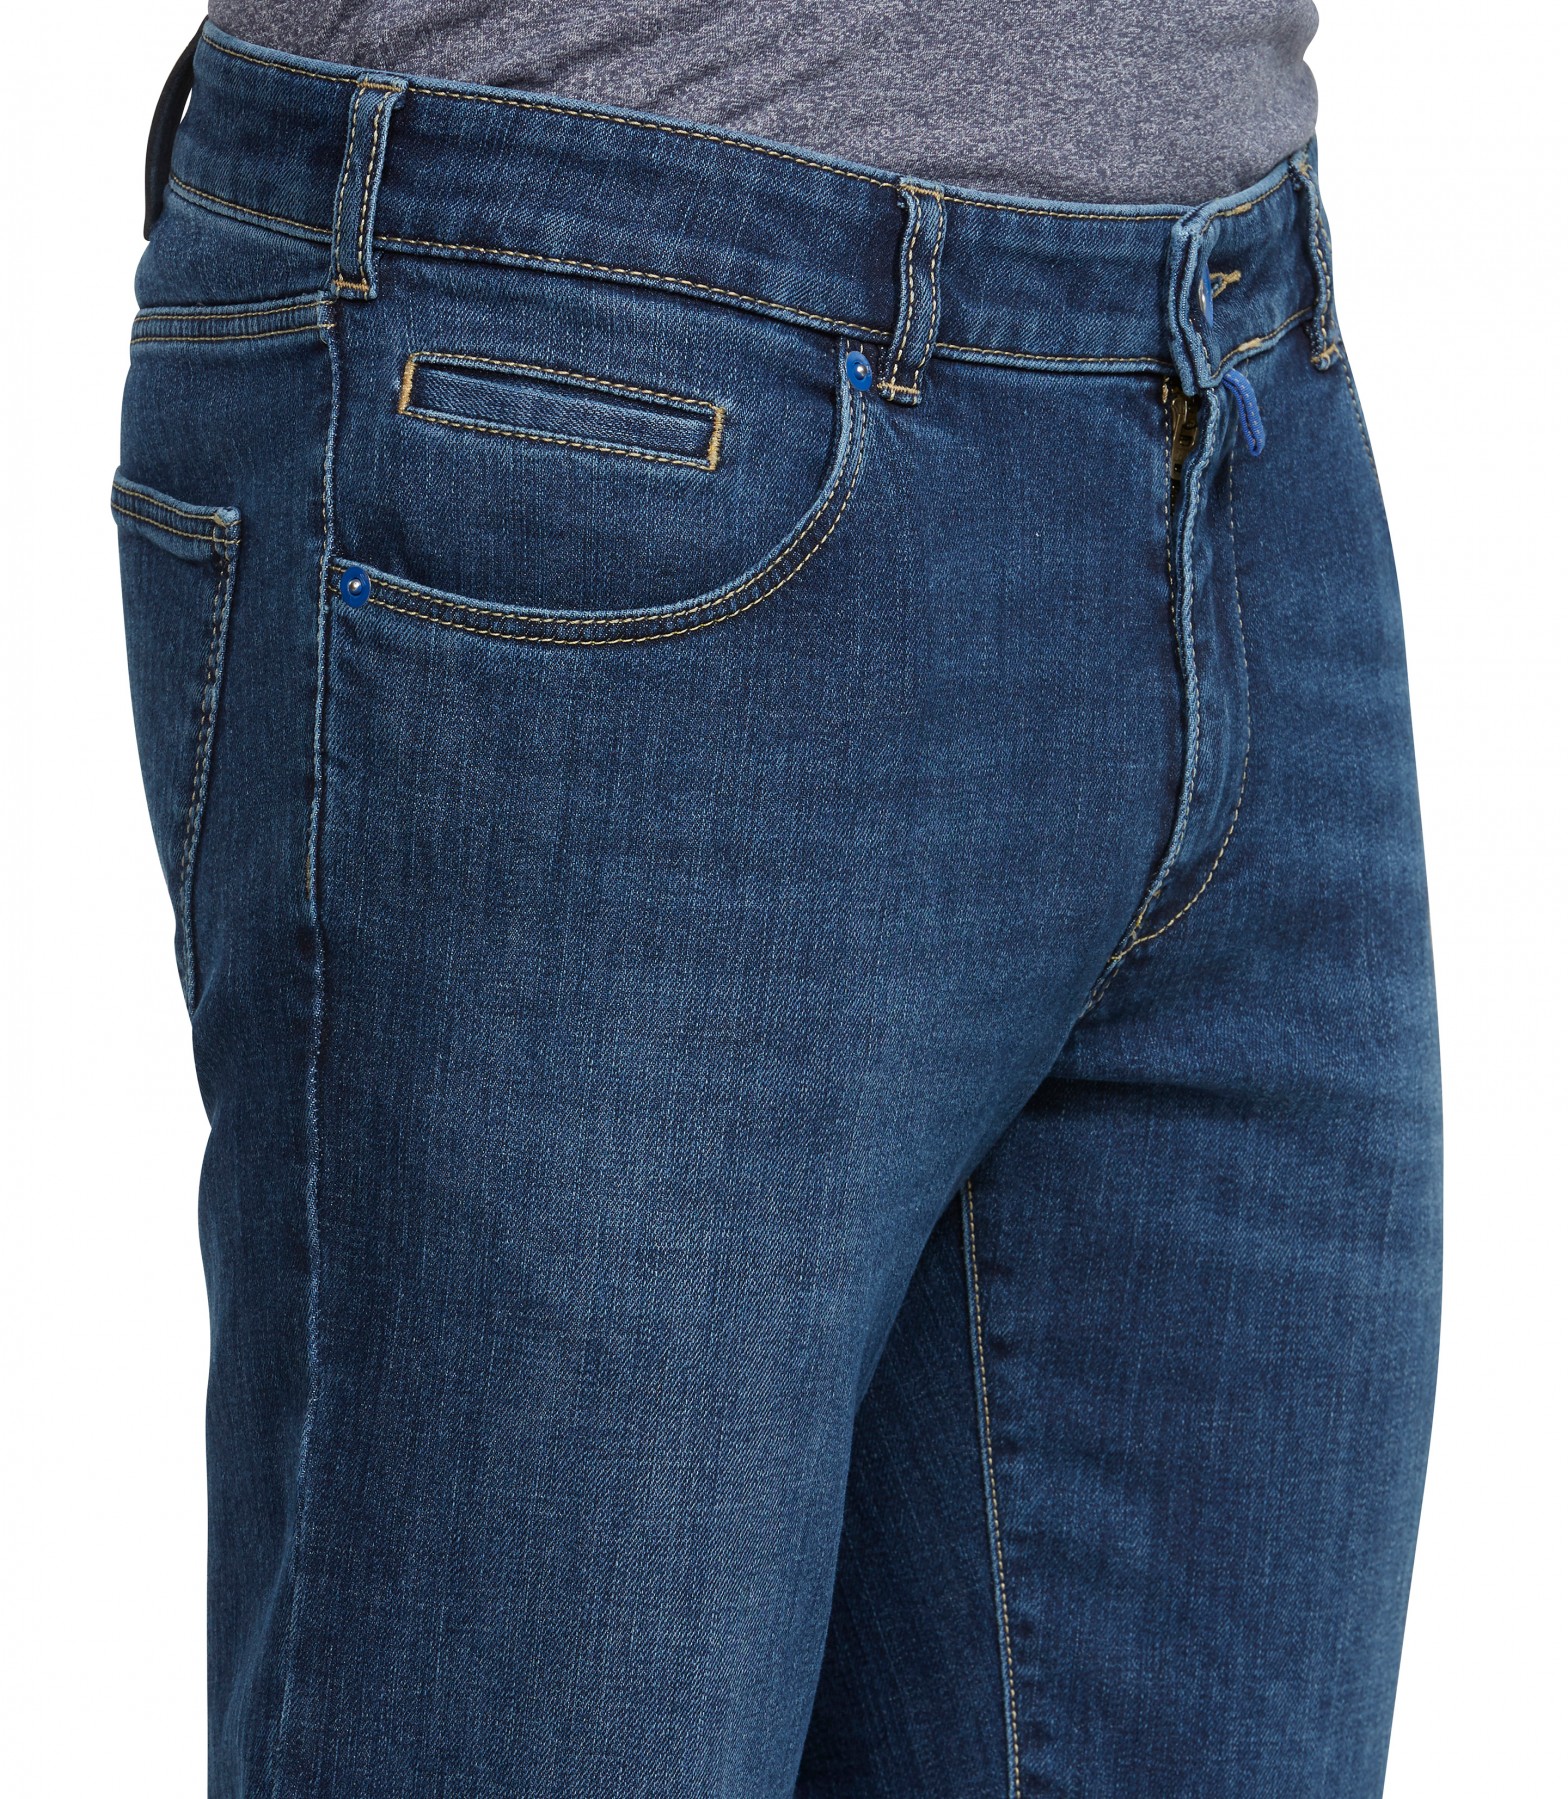 Meyer Meyer M5 Jeans- Denim | Menswear | Jeans | Coles Menswear and ...